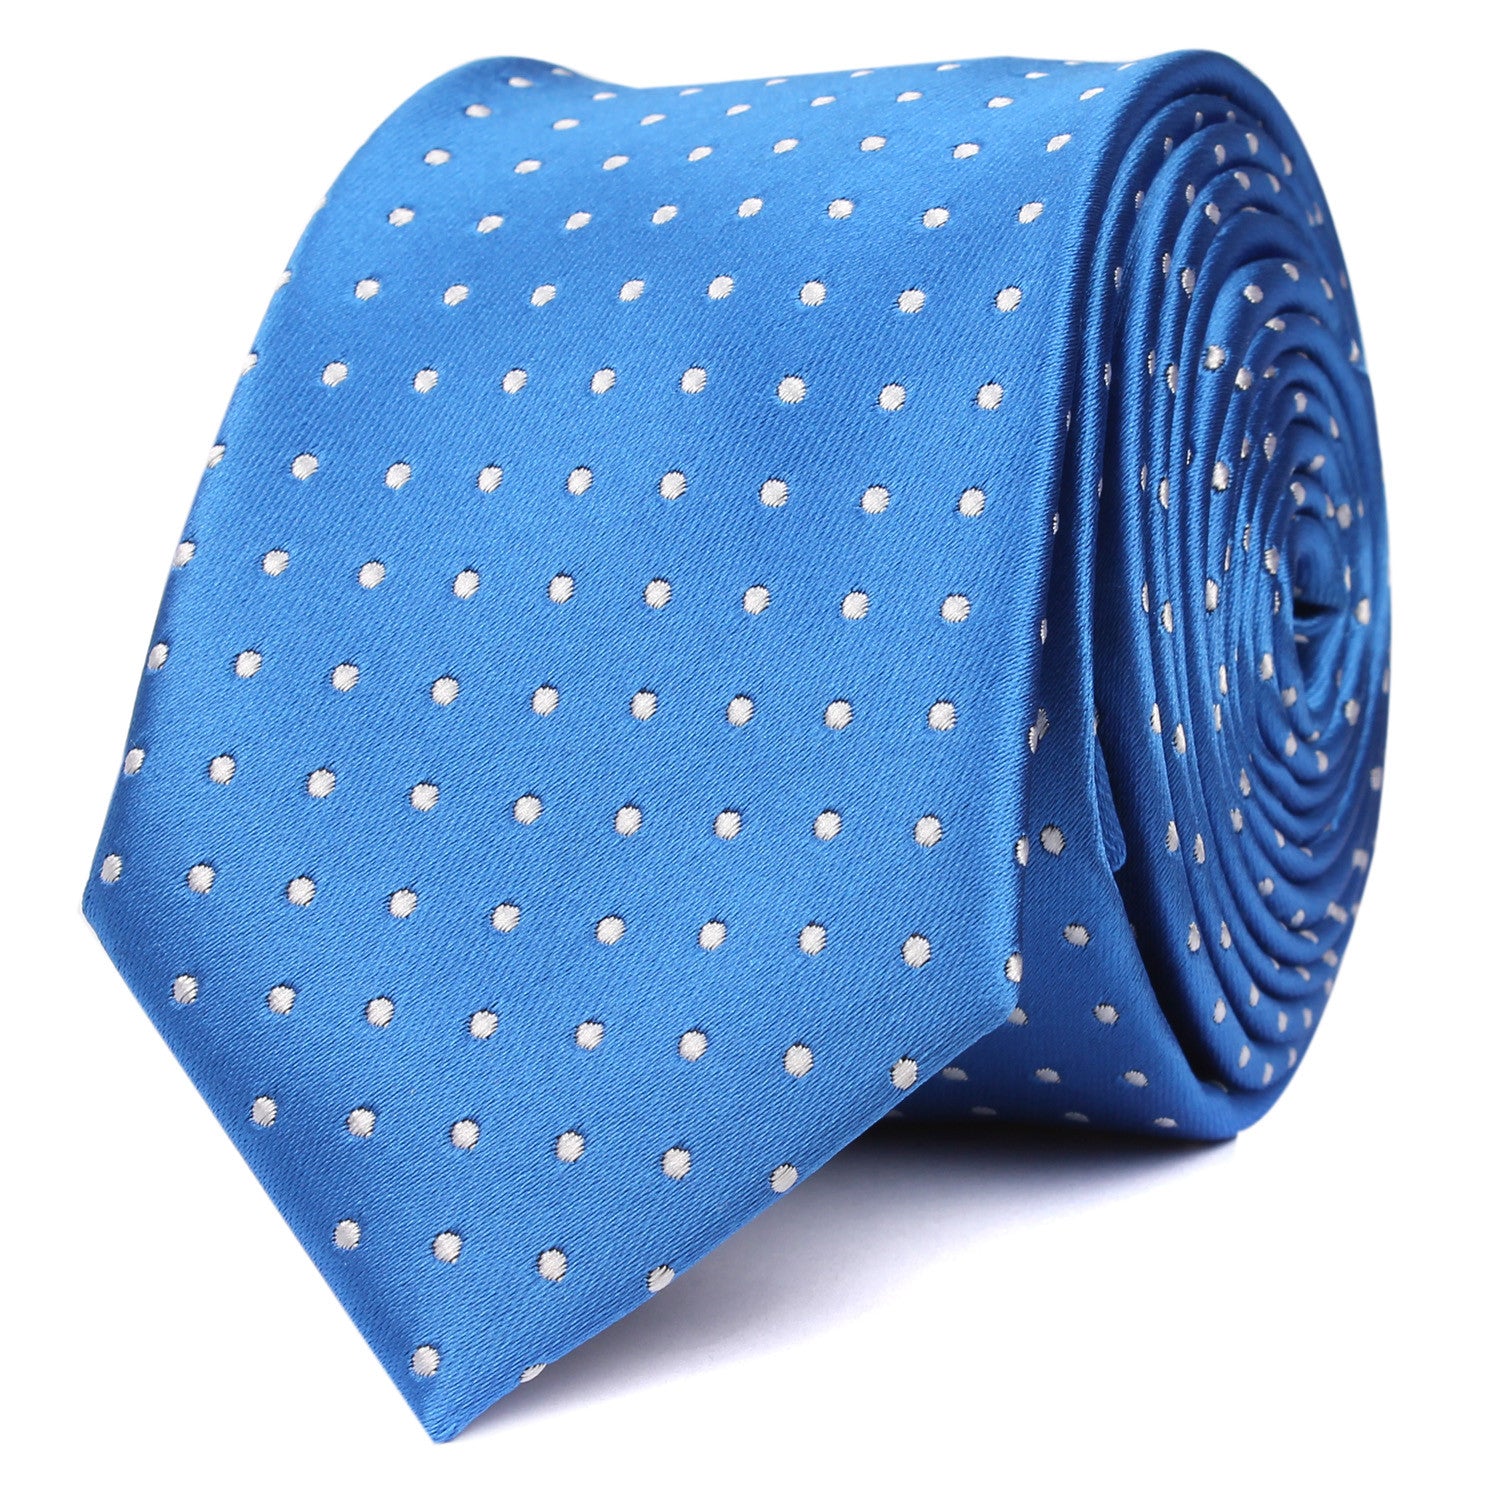 Sea Blue Skinny Tie with White Polka Dots OTAA roll